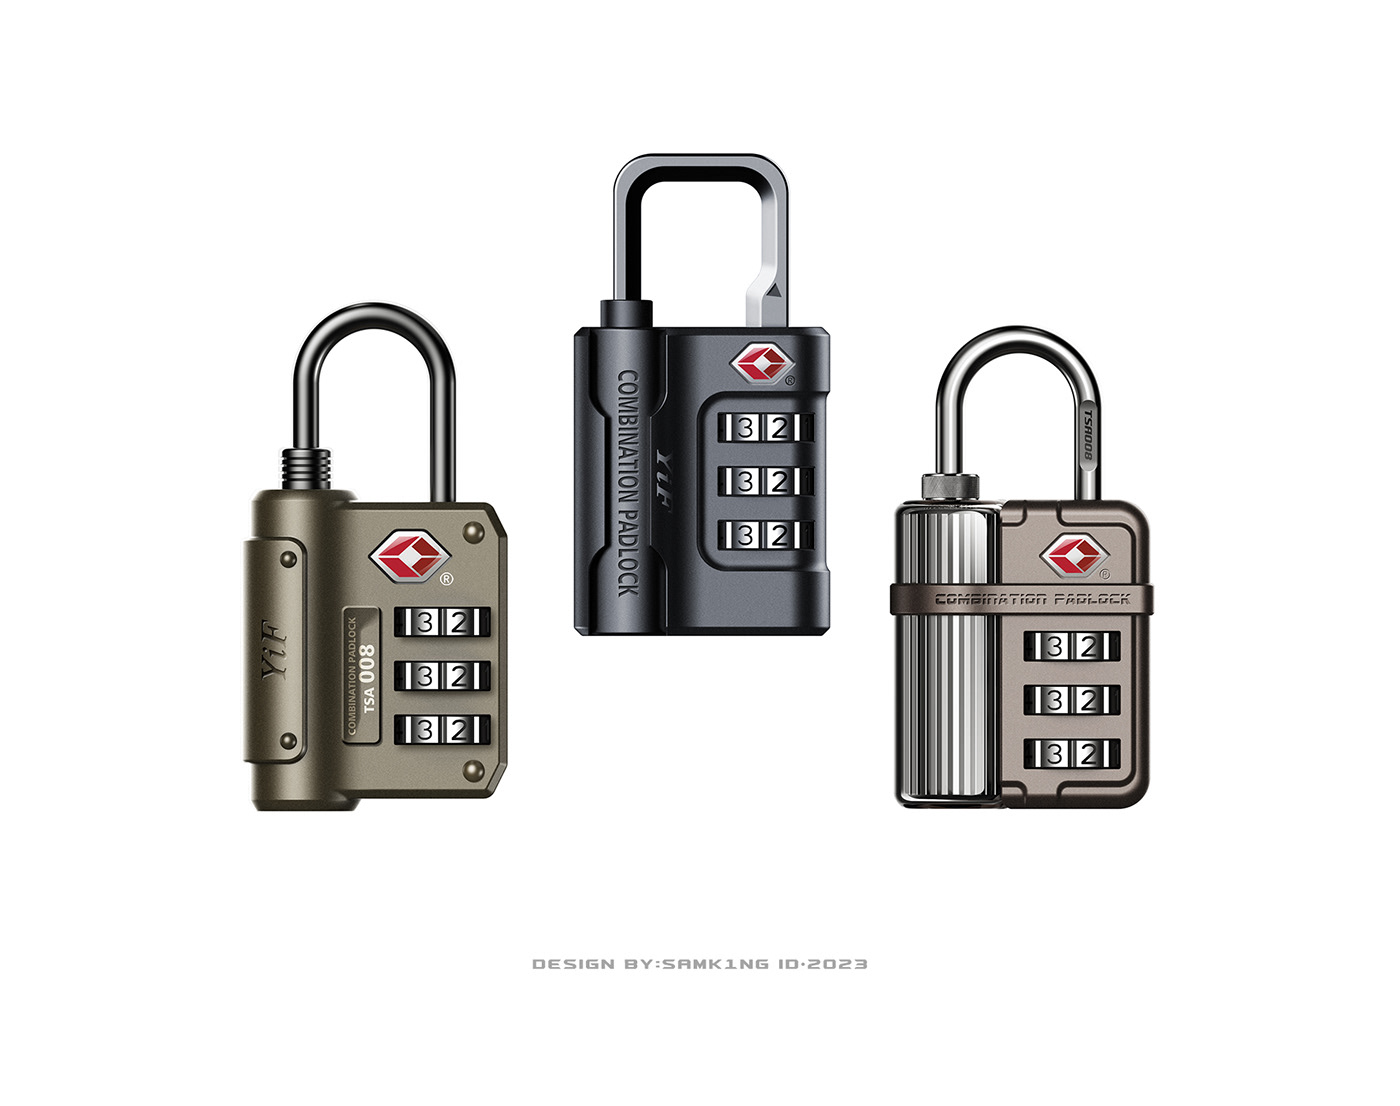 lock locksmith Lockout 2D design safety Password Fashion  rekey Travel Lock